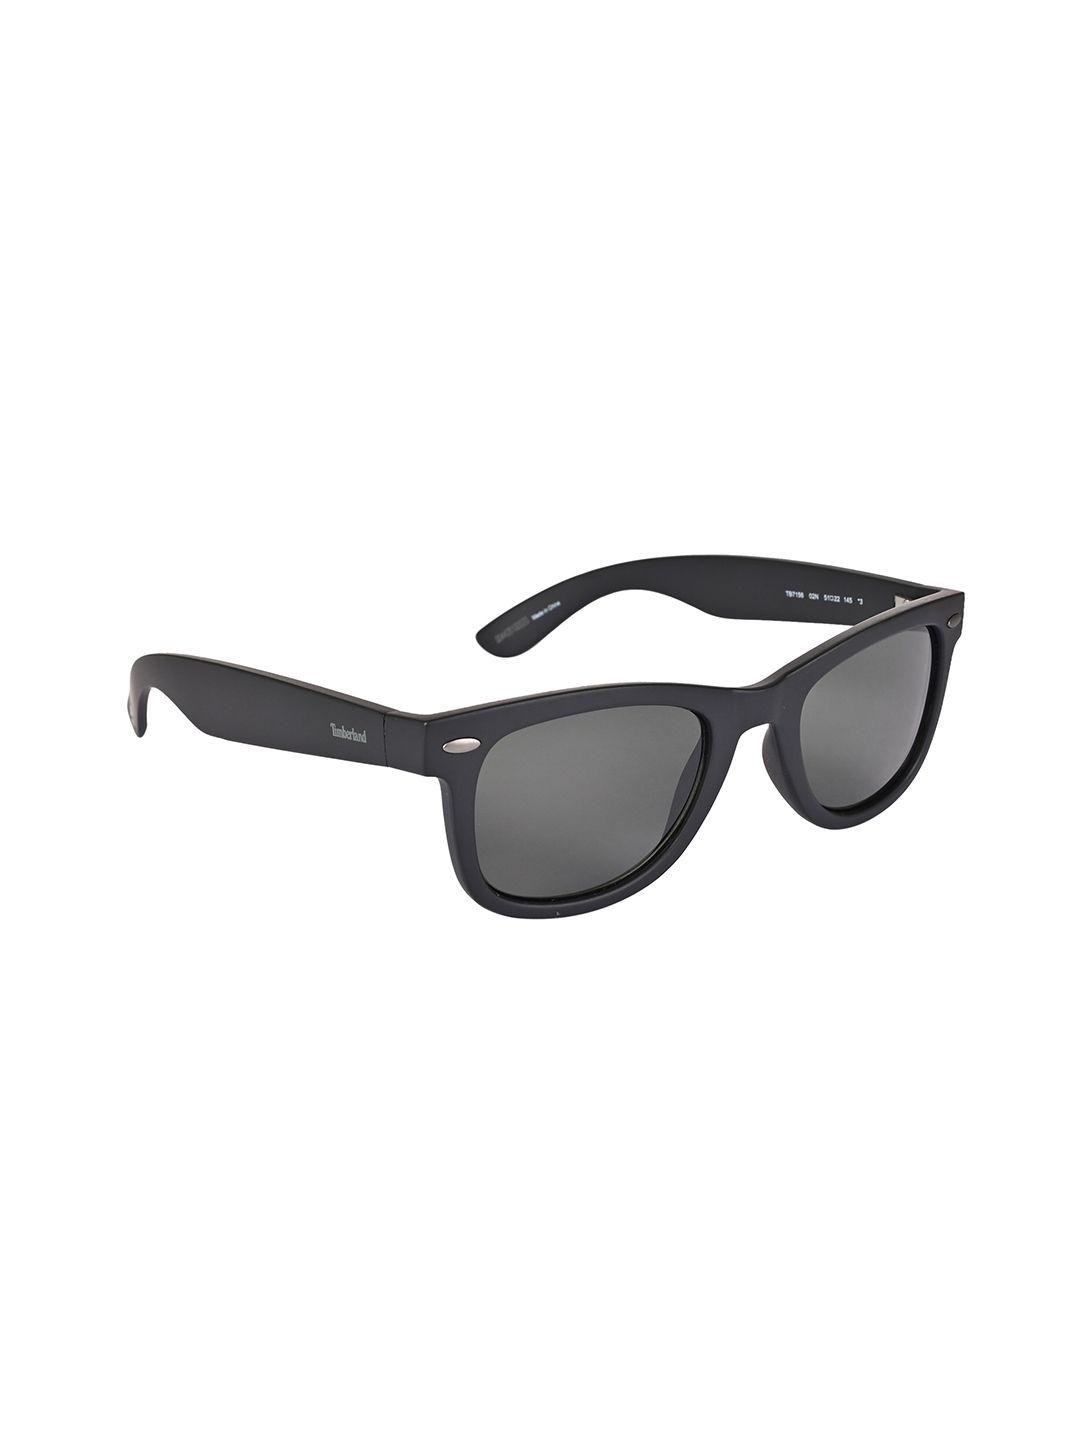 timberland-men-uv-protective-lens-square-sunglasses-tb7156-51-02n